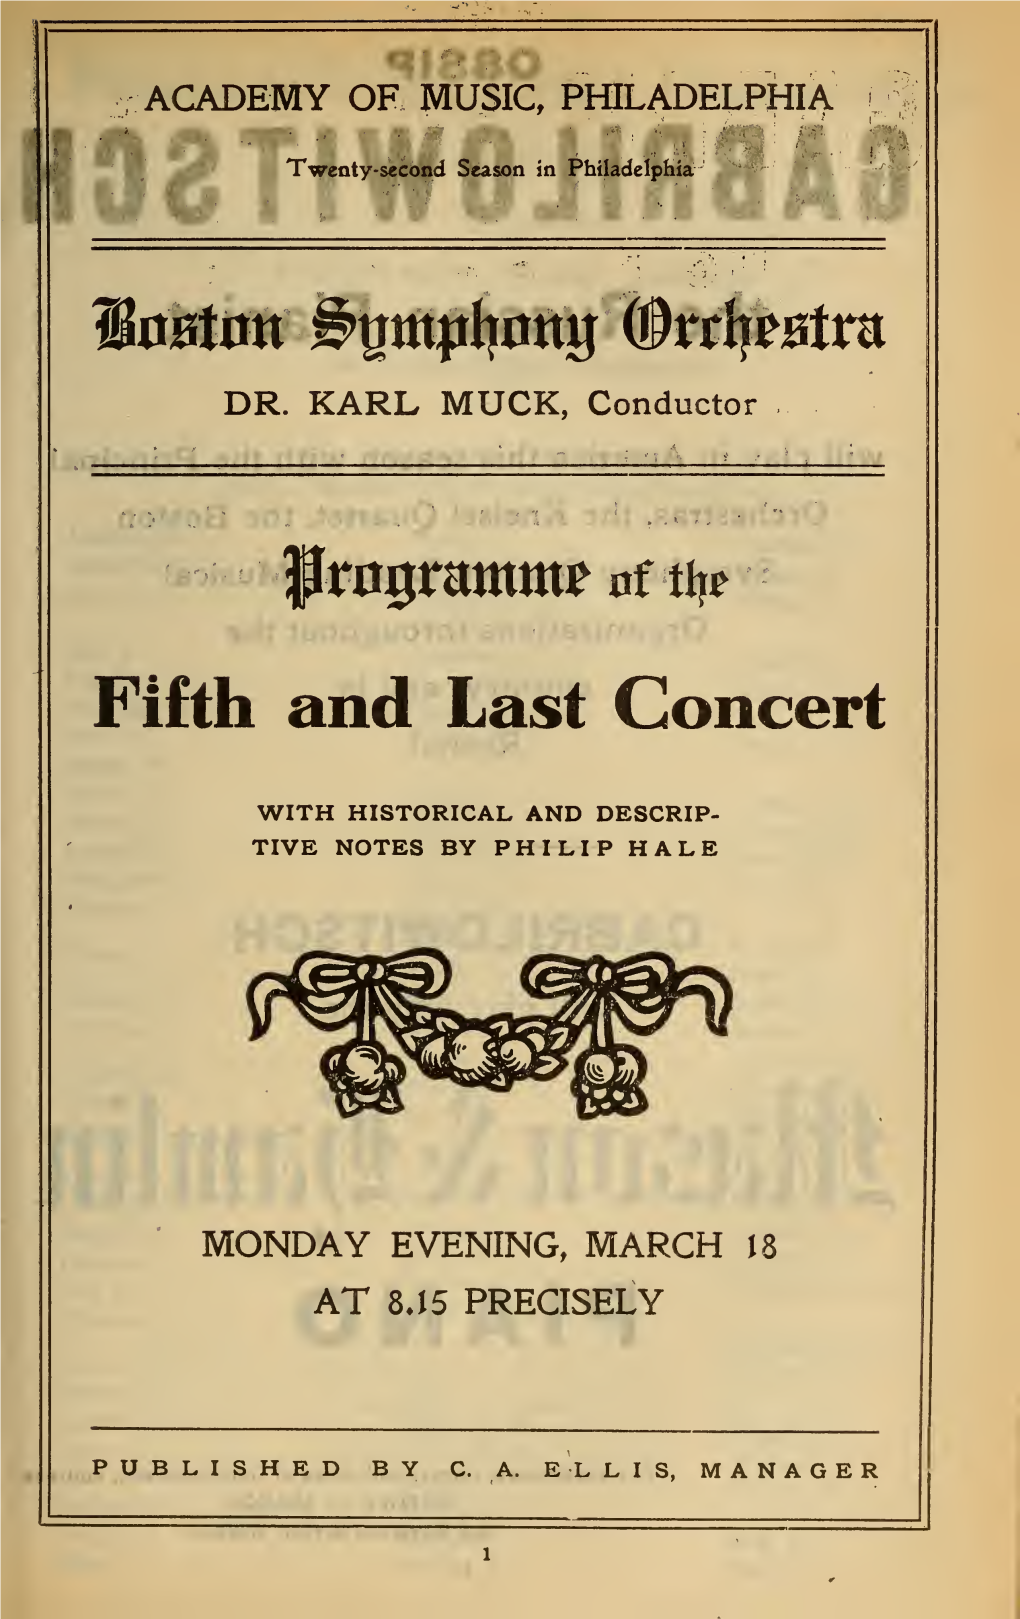 Boston Symphony Orchestra Concert Programs, Season 26,1906-1907, Trip